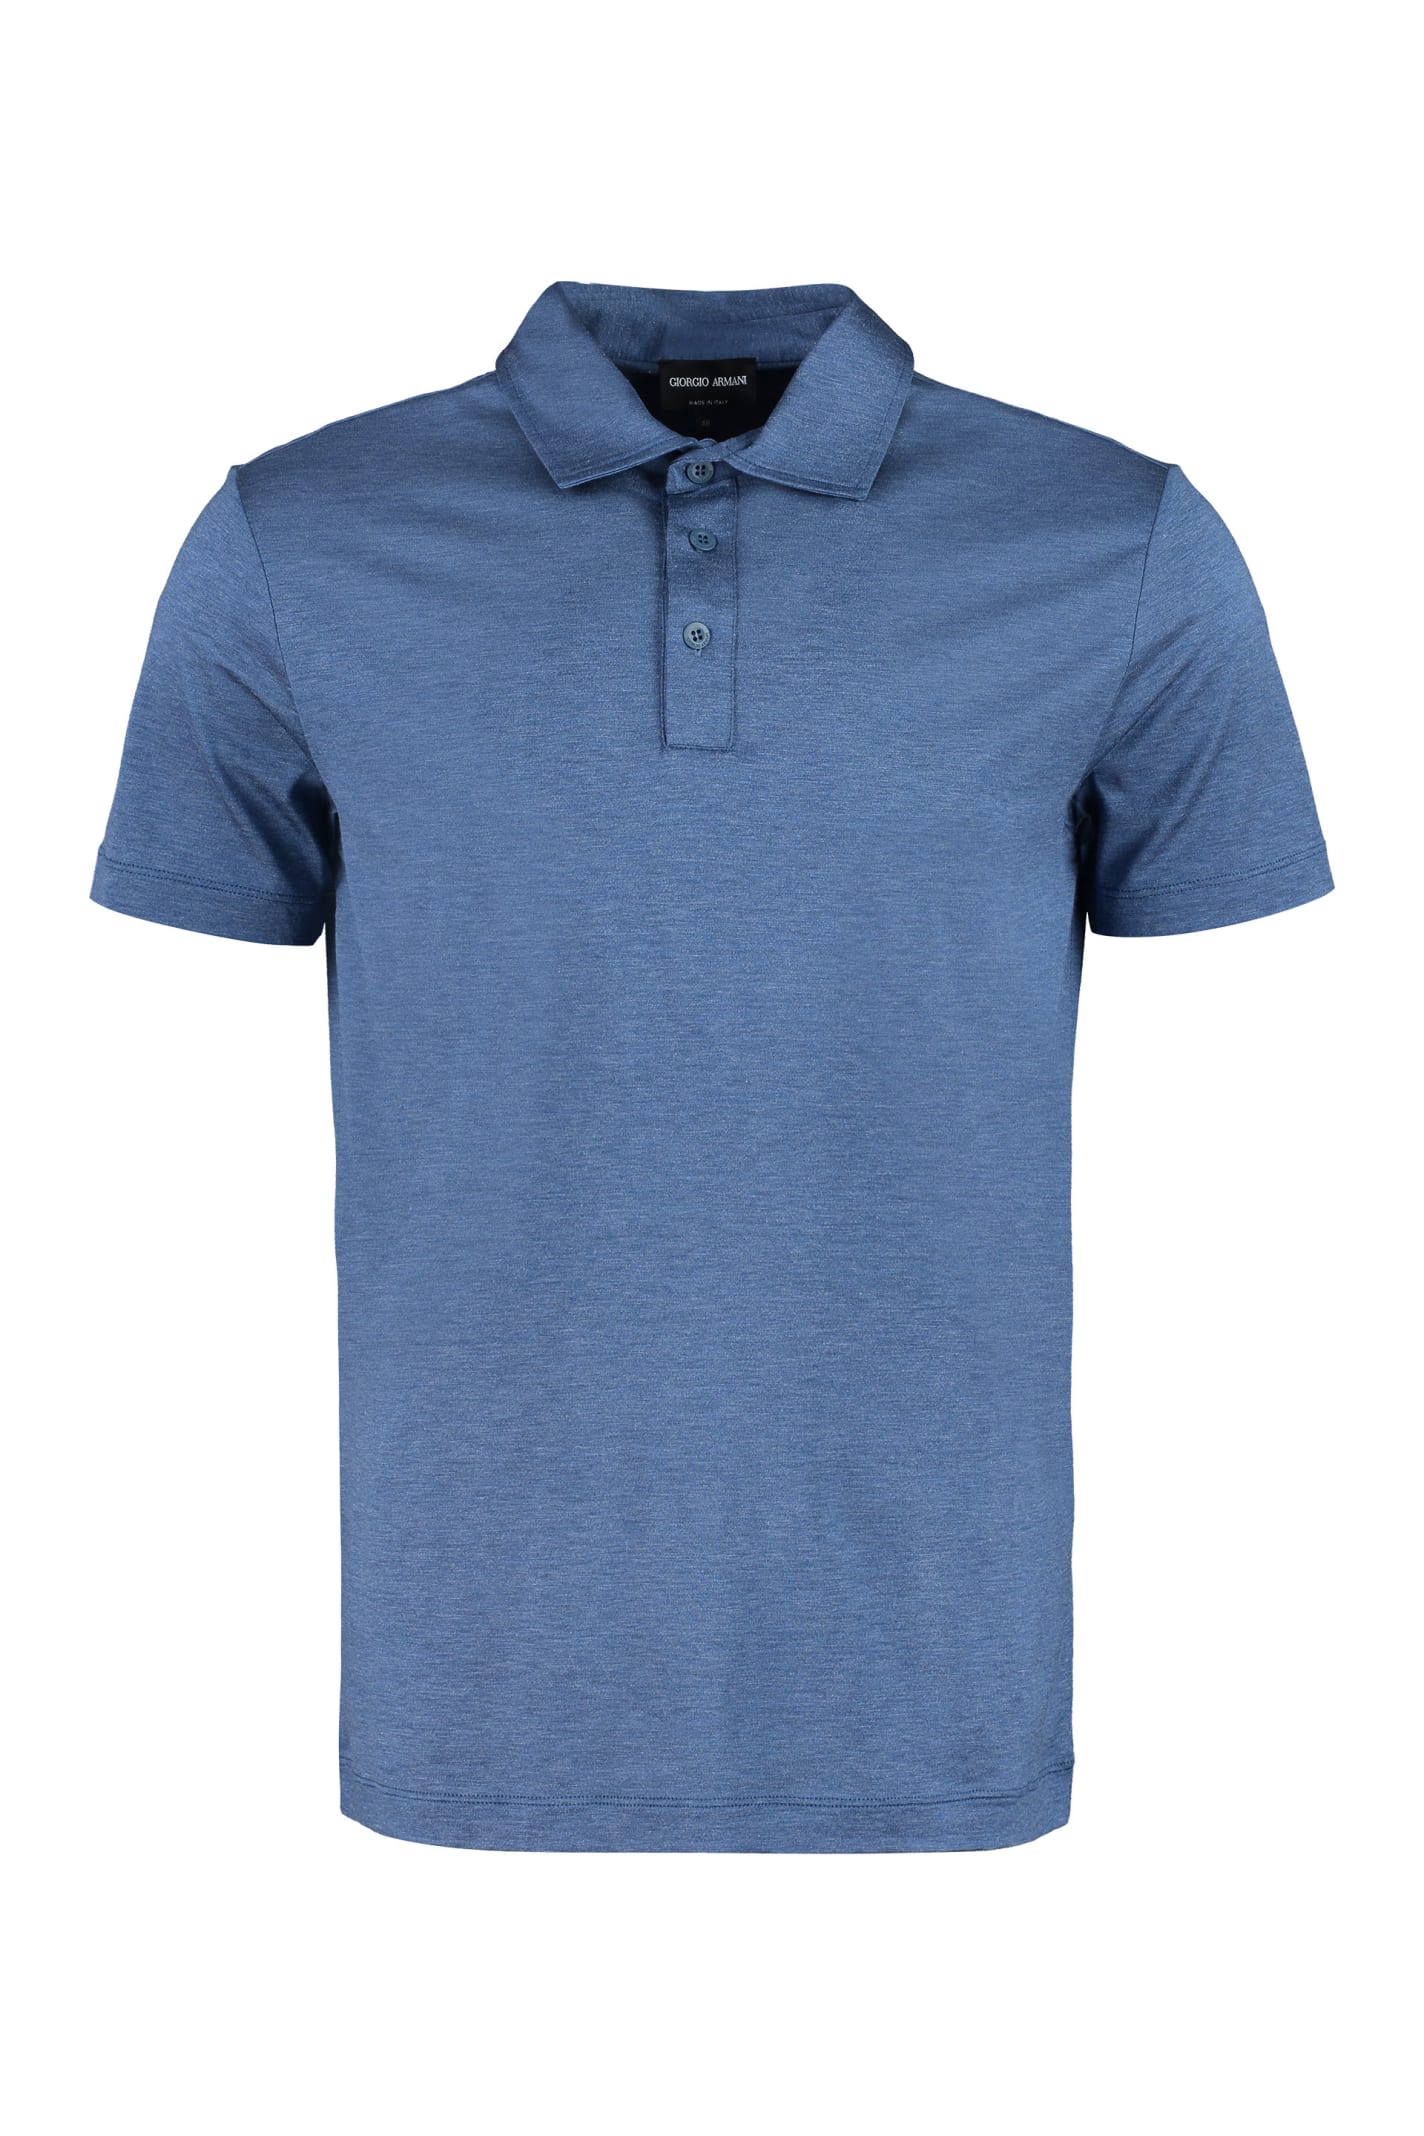 Giorgio Armani Silk And Cotton Polo Shirt